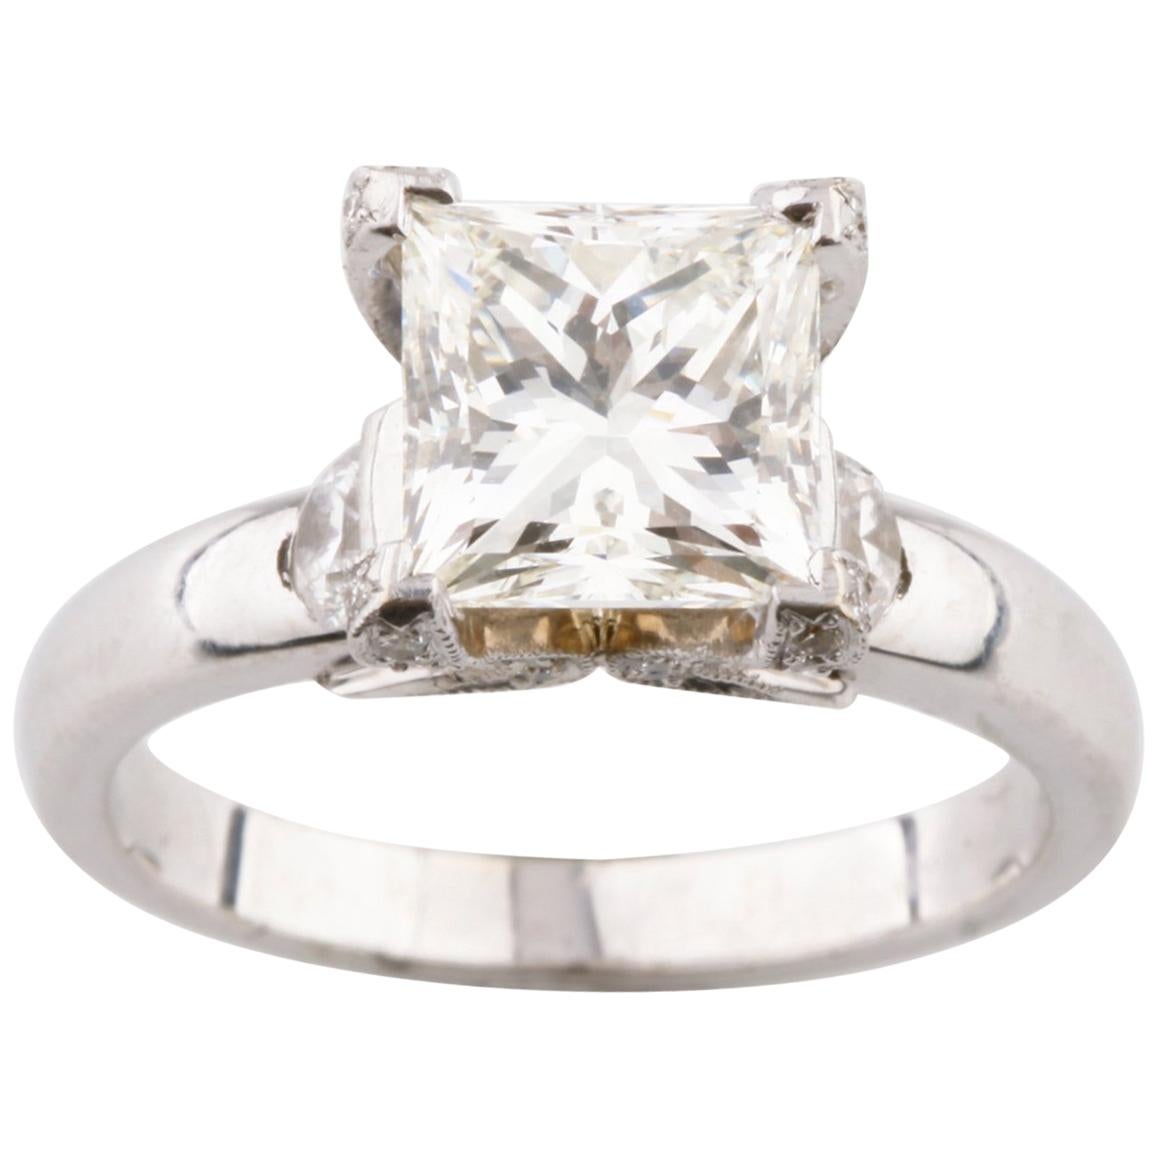 2.11 Carat Princess Cut Diamond 14 Karat White Gold Solitaire Engagement Ring